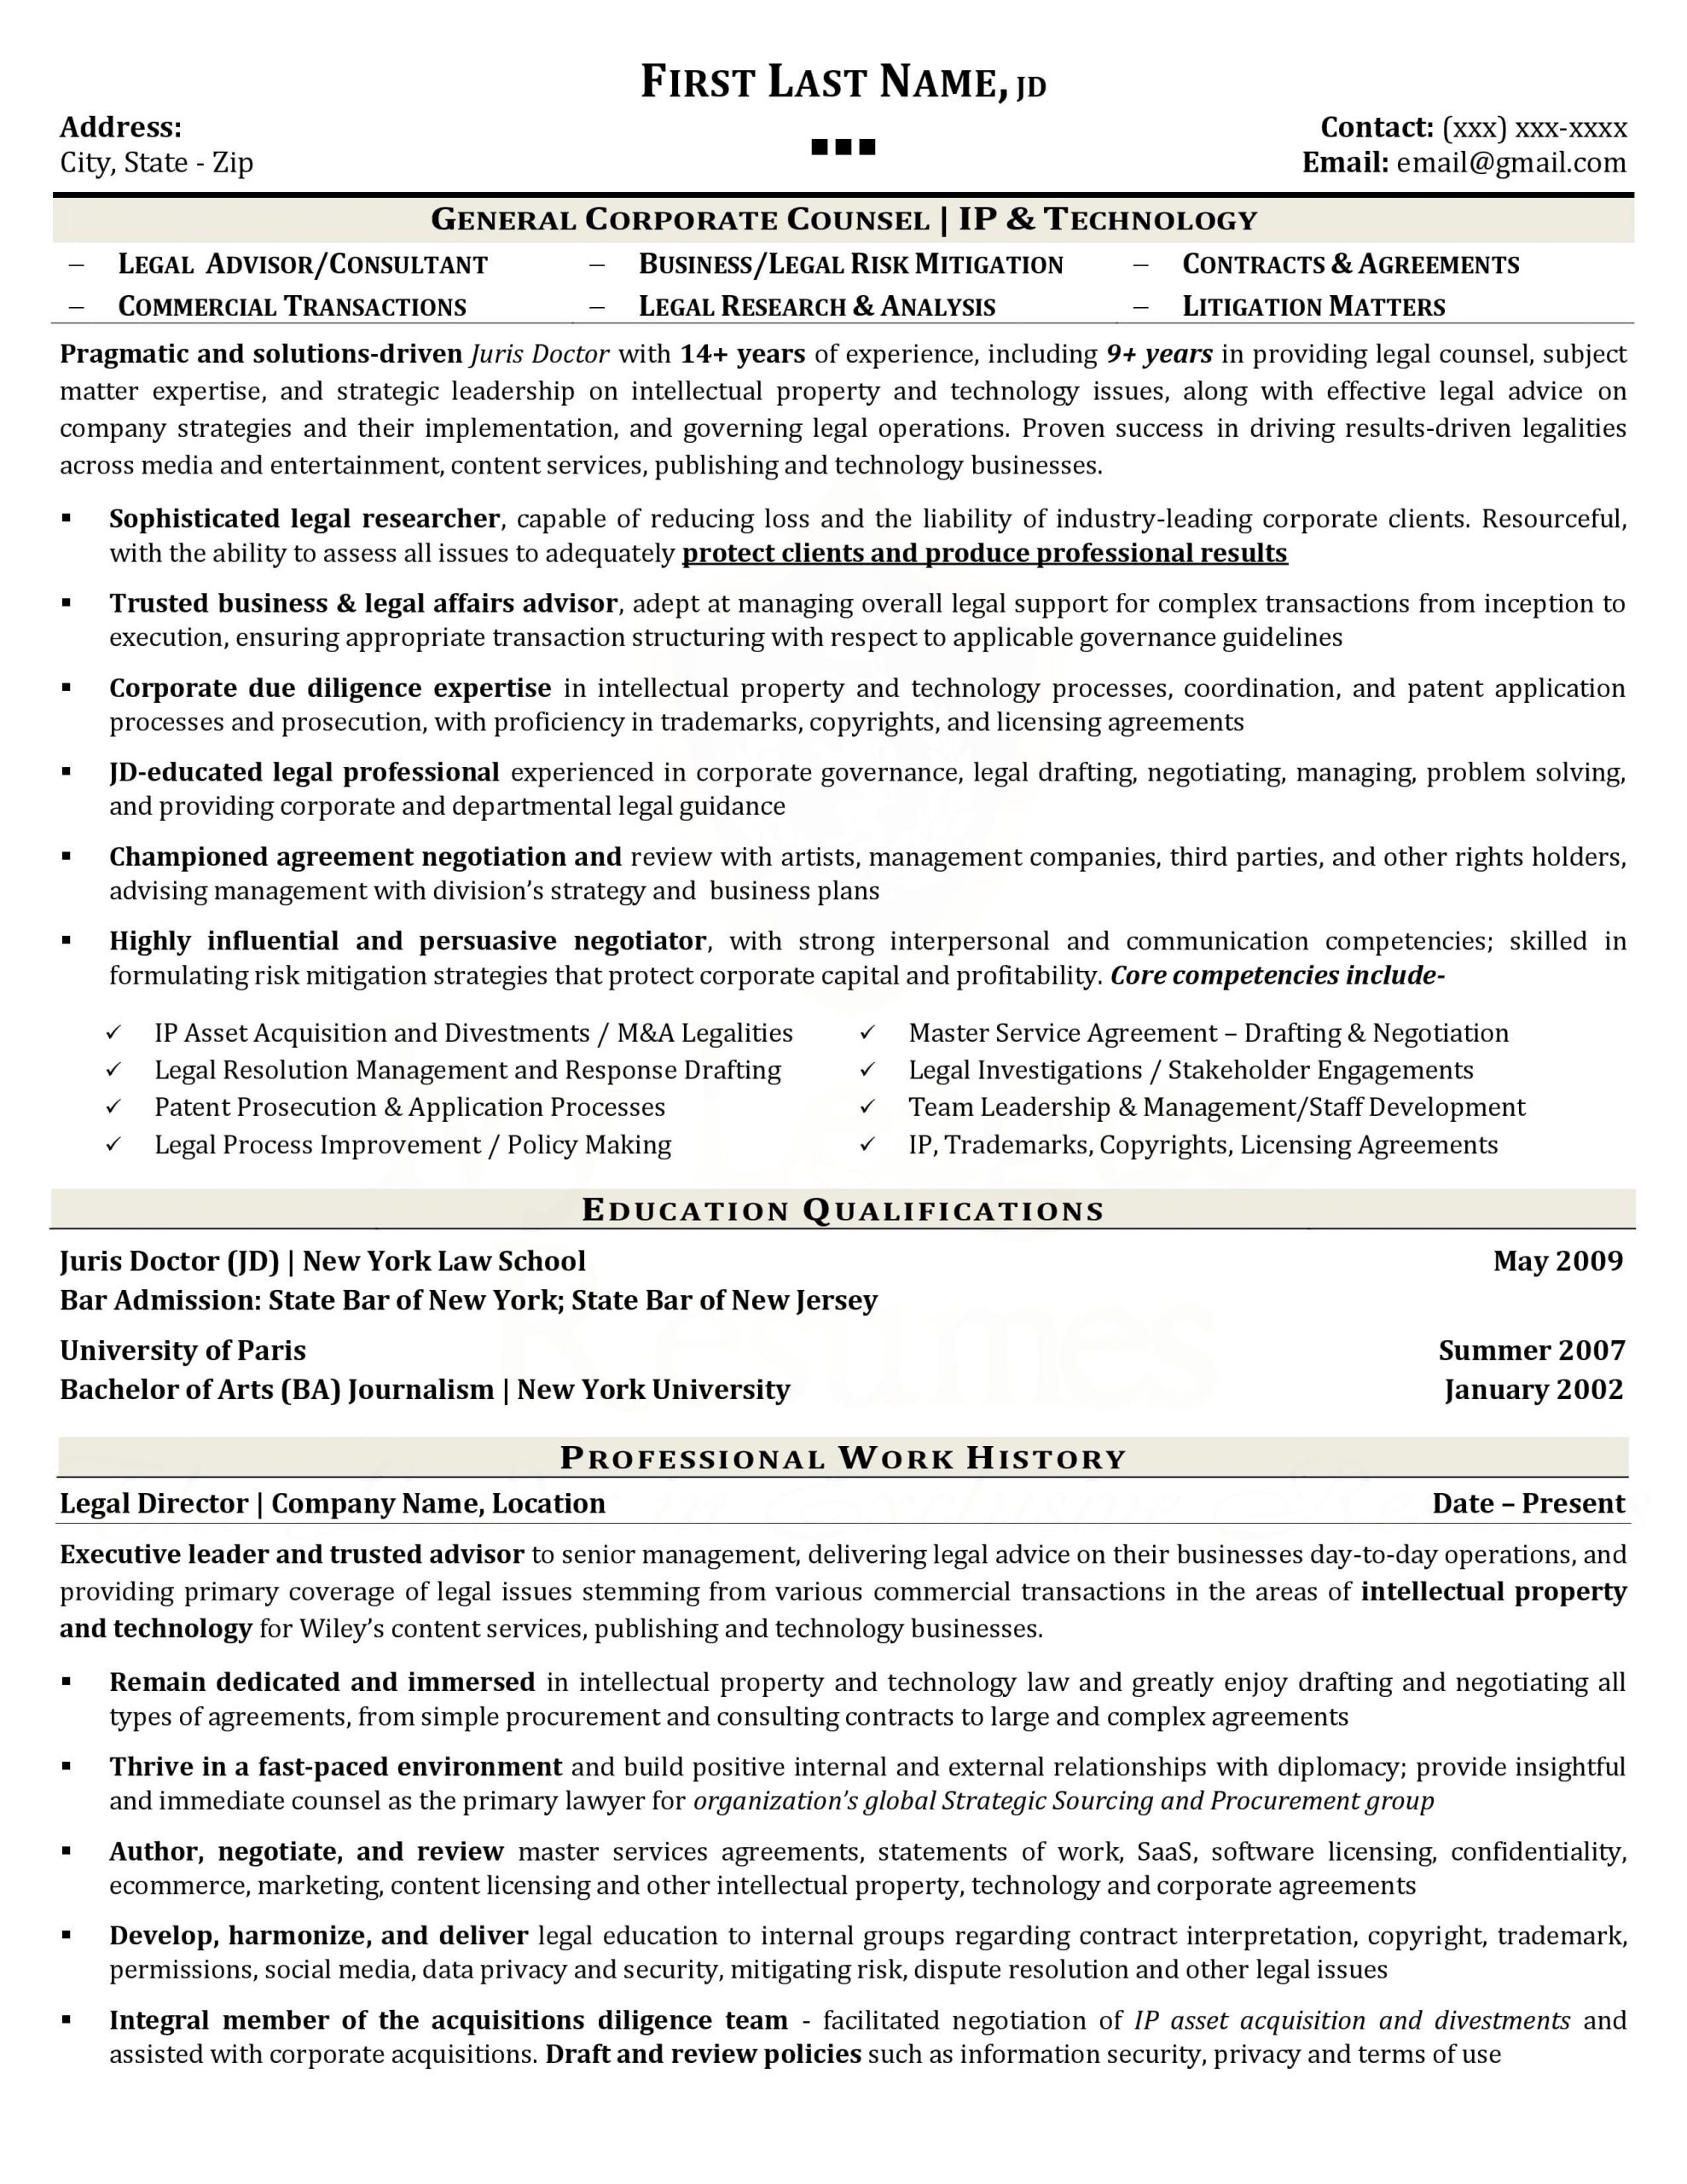 sample college application resume ivyml